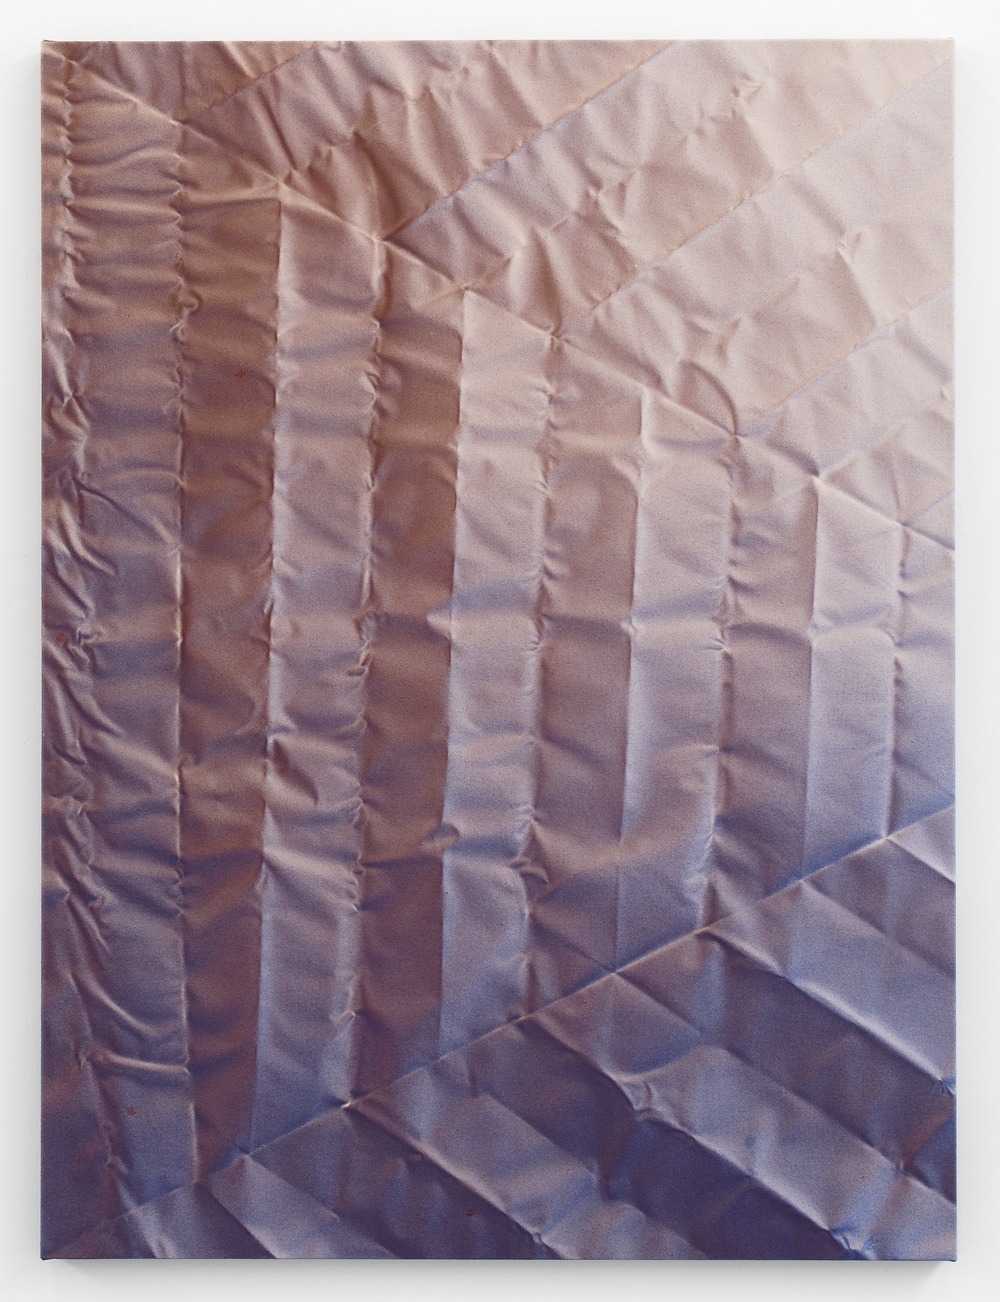 0364 Untitled (Fold)-Tauba-Auerbach-large.jpg